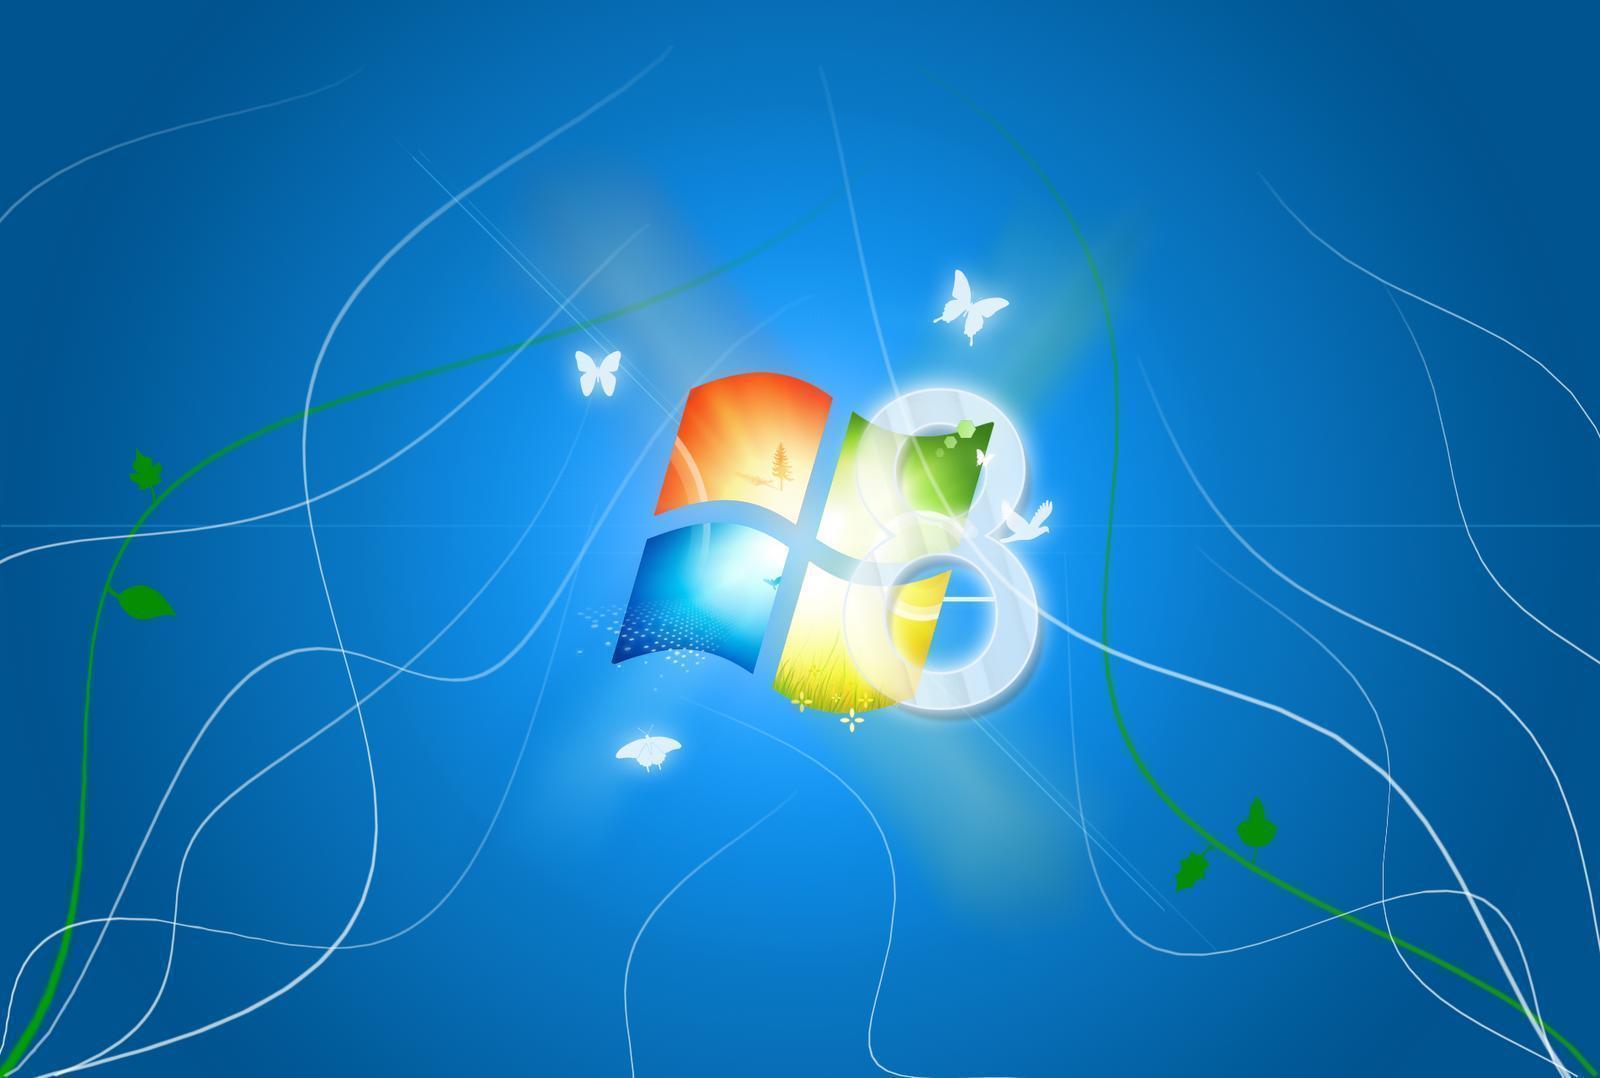 Best Windows 8 Desktop Wallpaper. Wallpaper Picture Lovers